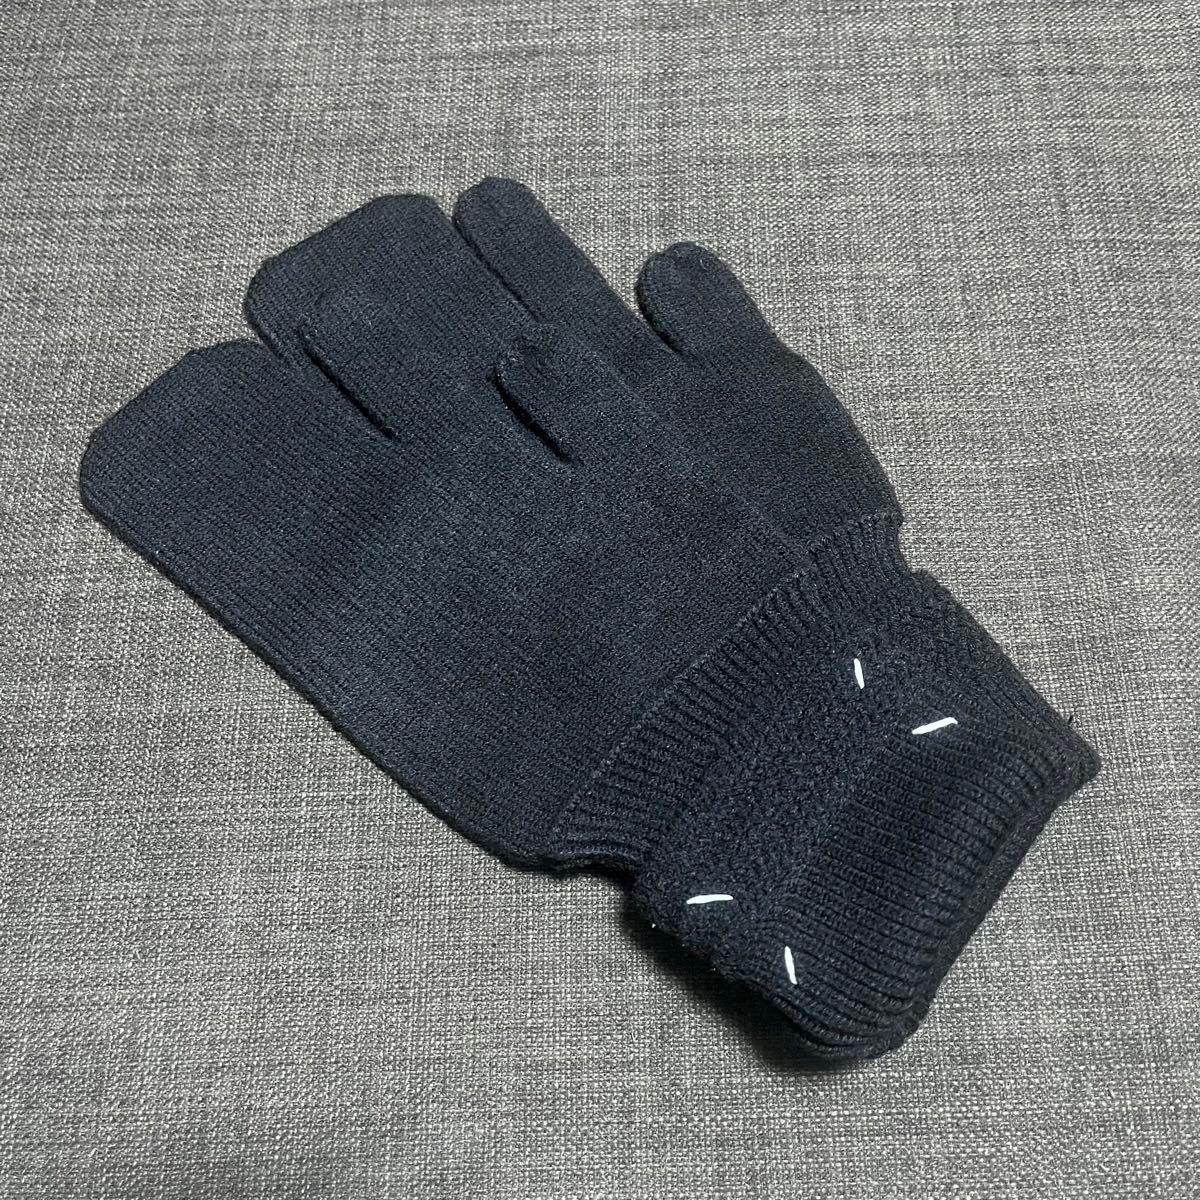 Maison Margiela Tabi gloves 足袋手袋 メゾンマルジェラ 10番 メンズ